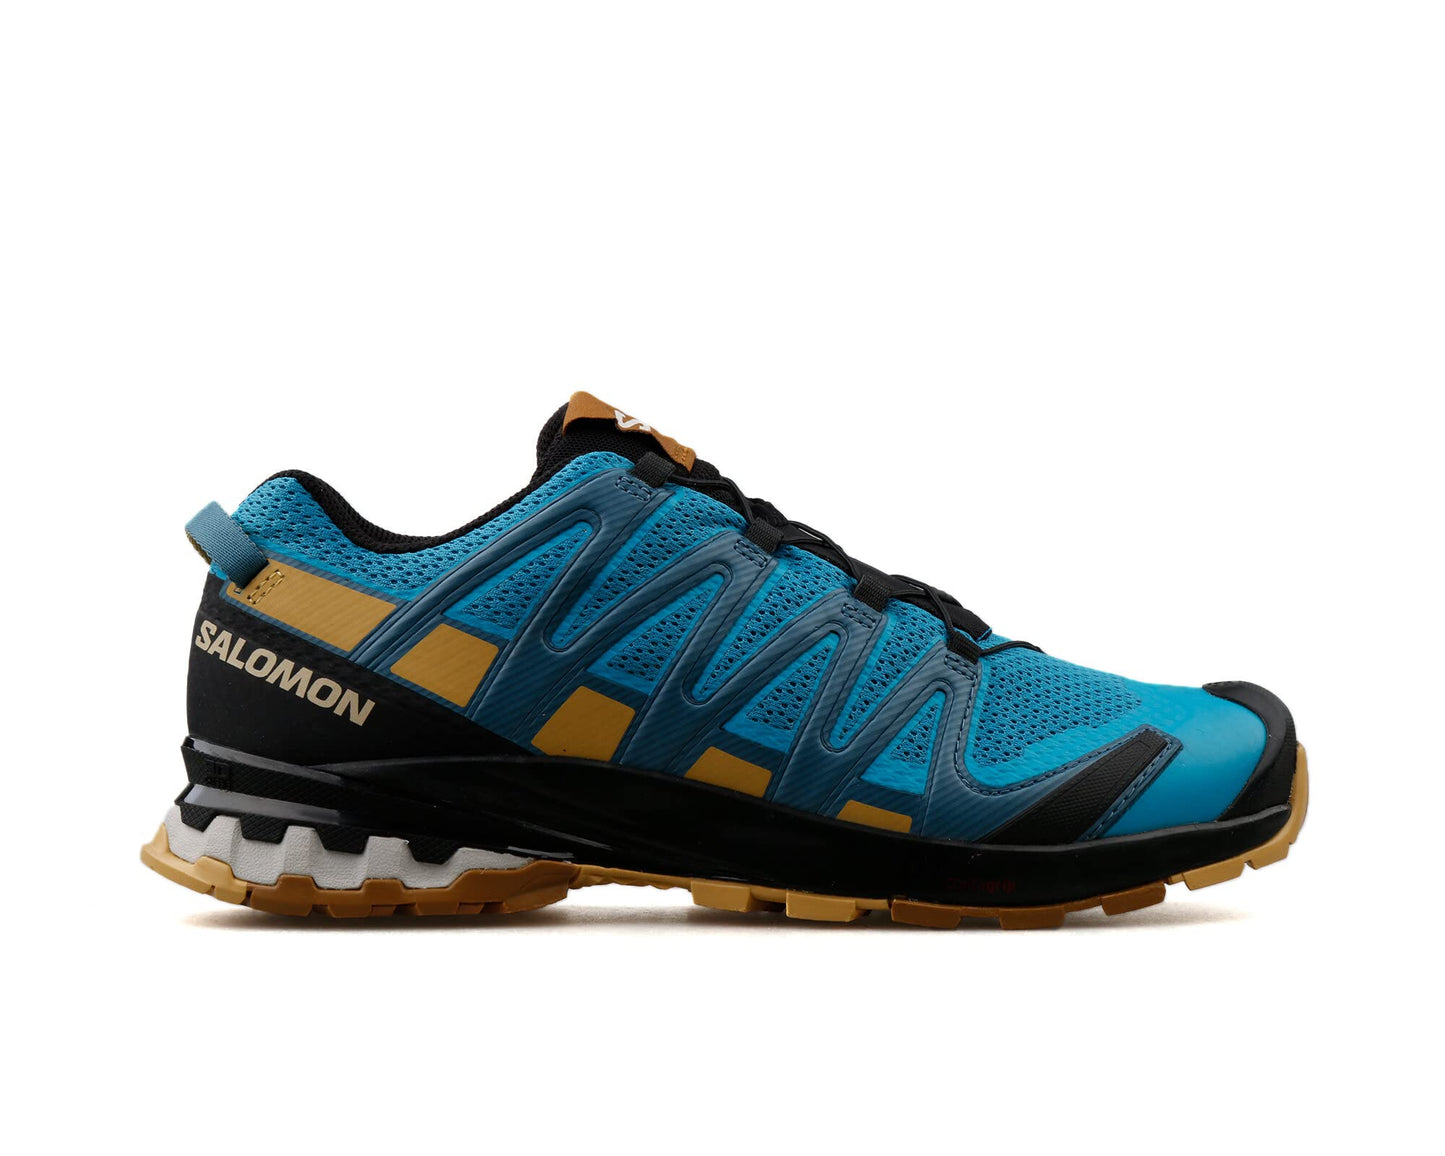 Salomon Xa Pro 3D V8 Trail Running Shoes for Men, Barrier Reef/Fall Leaf/Bronze Brown